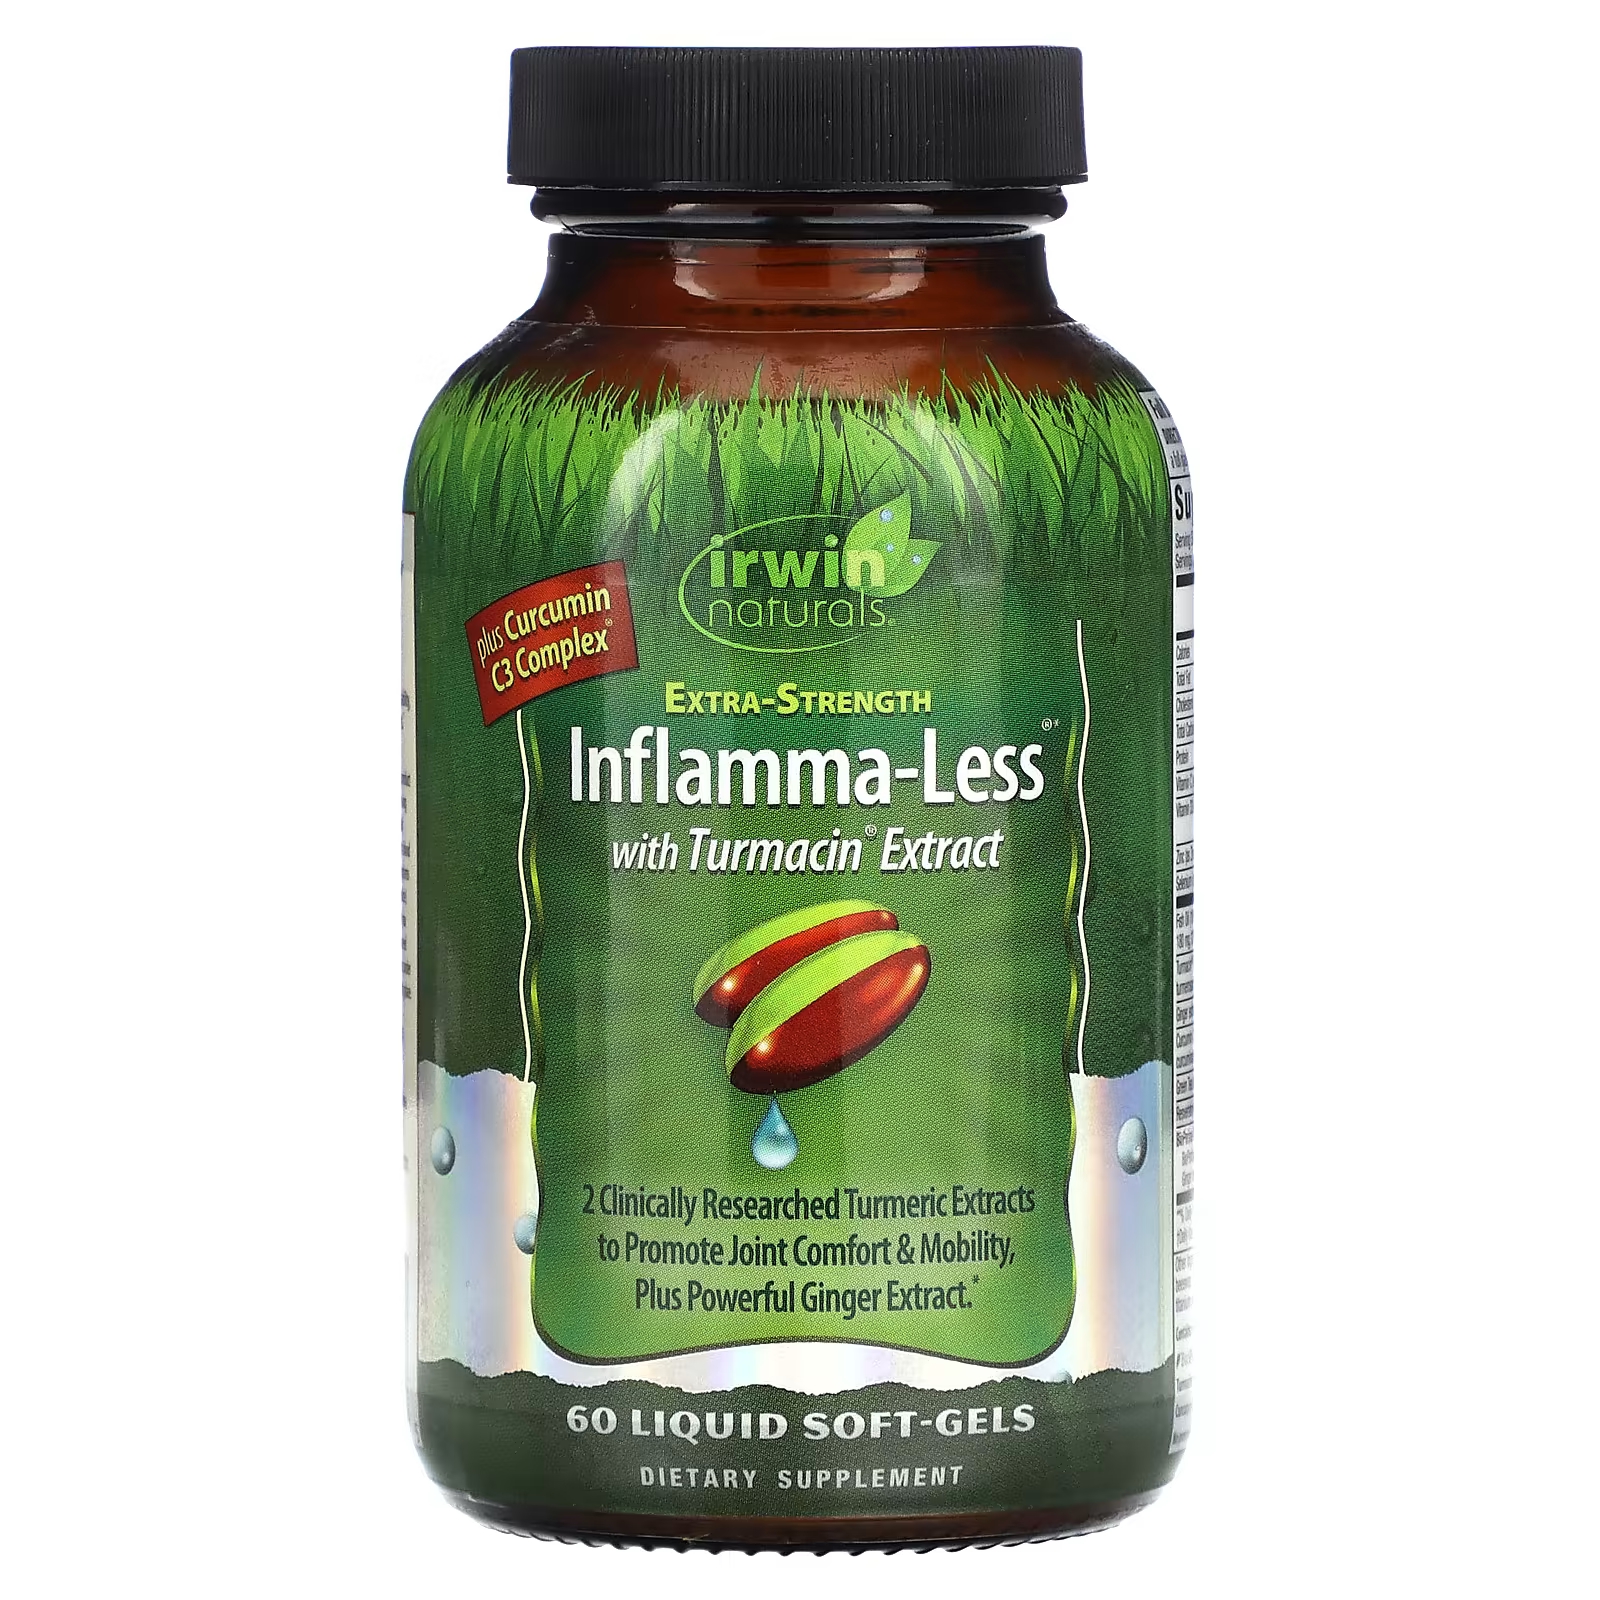 Пищевая добавка Irwin Naturals Inflamma-Less с экстрактом турмацина, 60 жидких капсул пищевая добавка irwin naturals inflamma less с экстрактом турмацина 60 жидких капсул